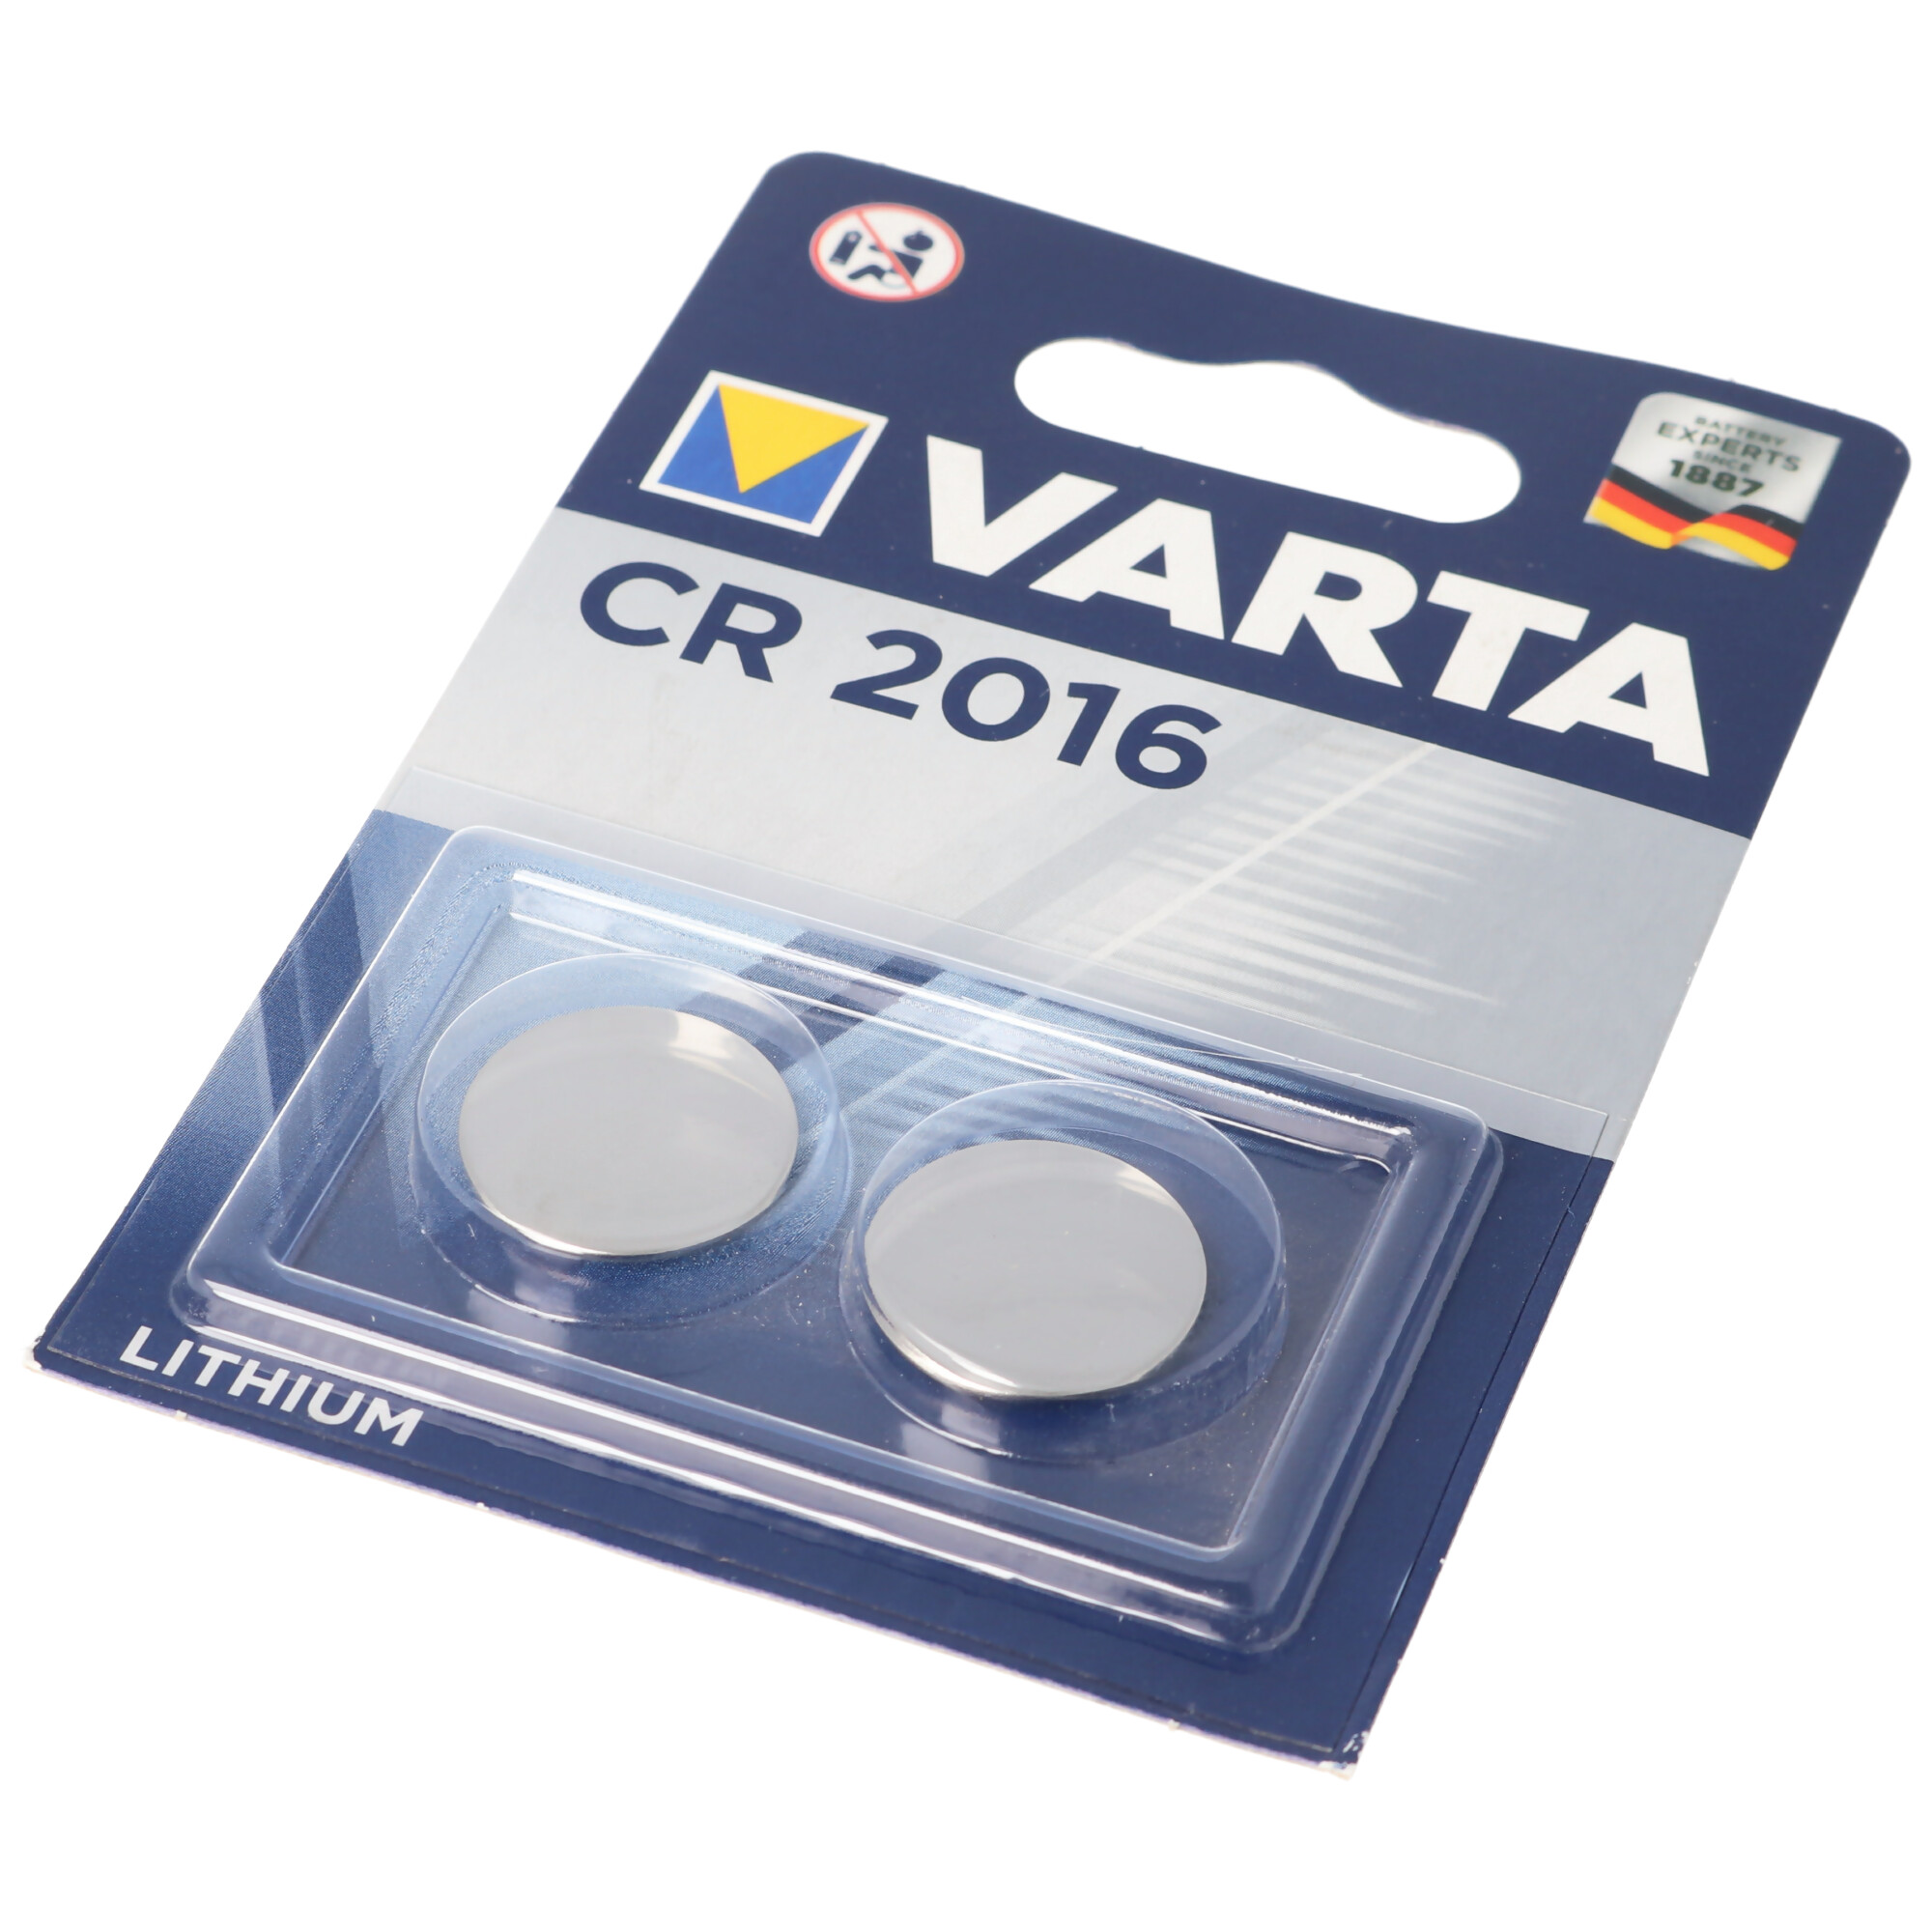 2 St 252 ck Varta CR2016 Lithium Batterie IEC CR 2016 Lithium Knopfzellen Lithium Batterien 